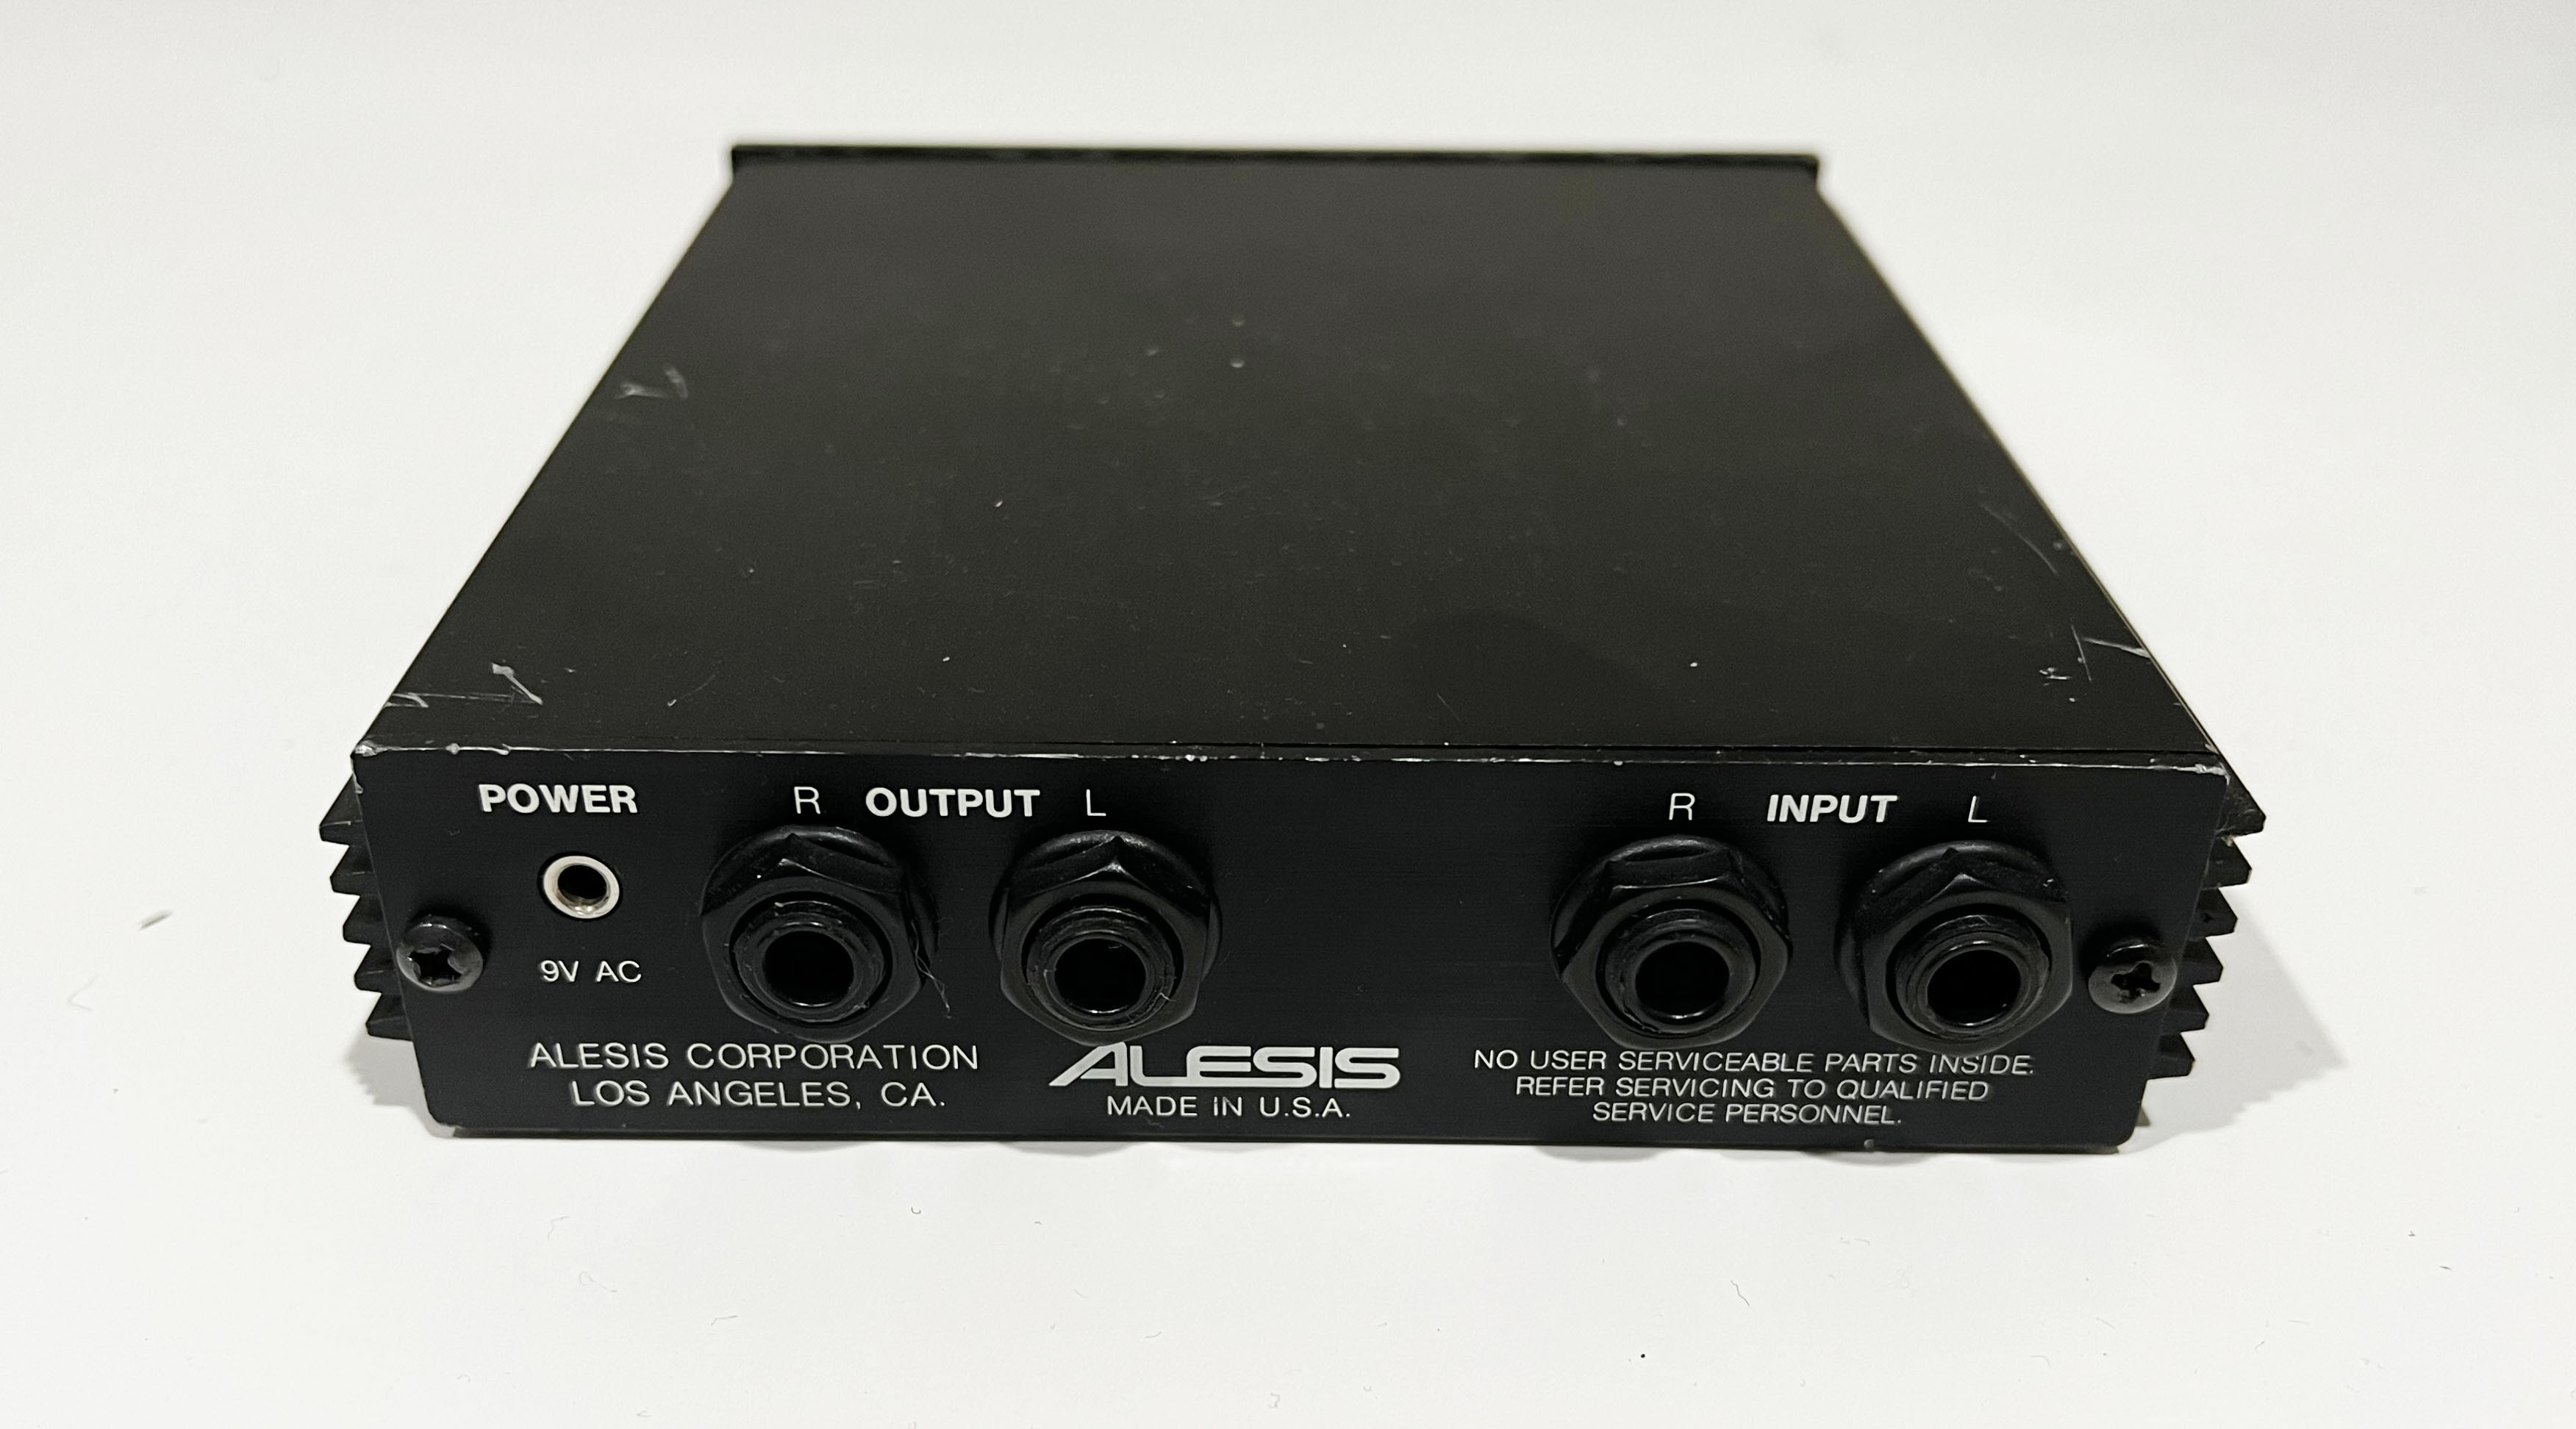 Alesis Micro Enhancer